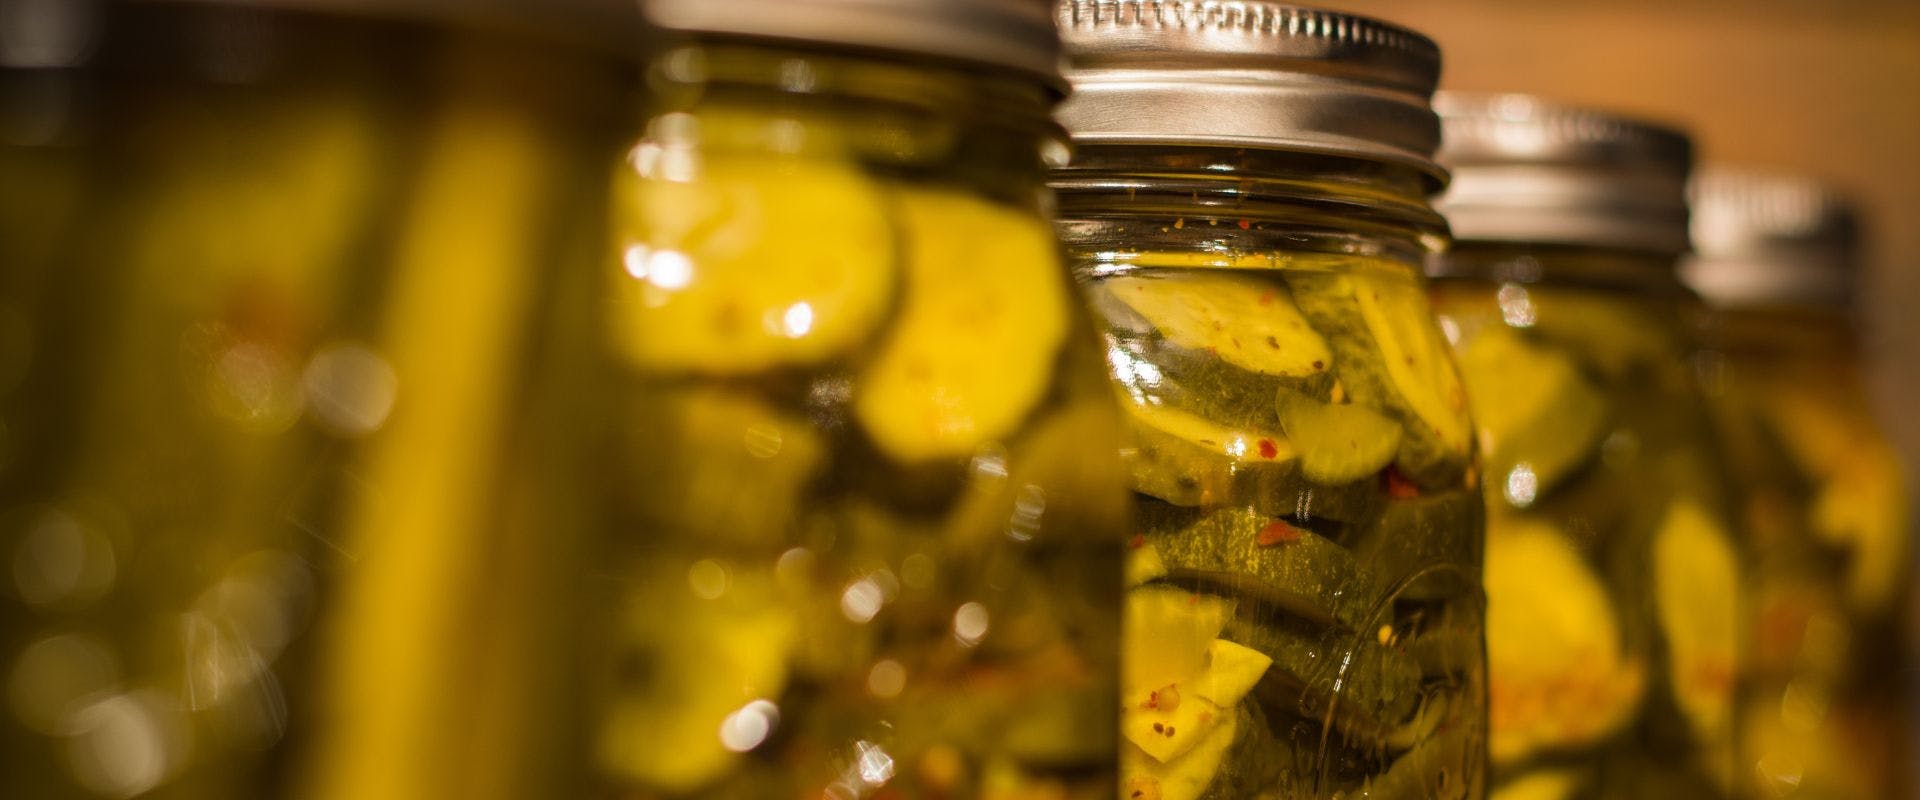 Multiple jars of pickled cucumber